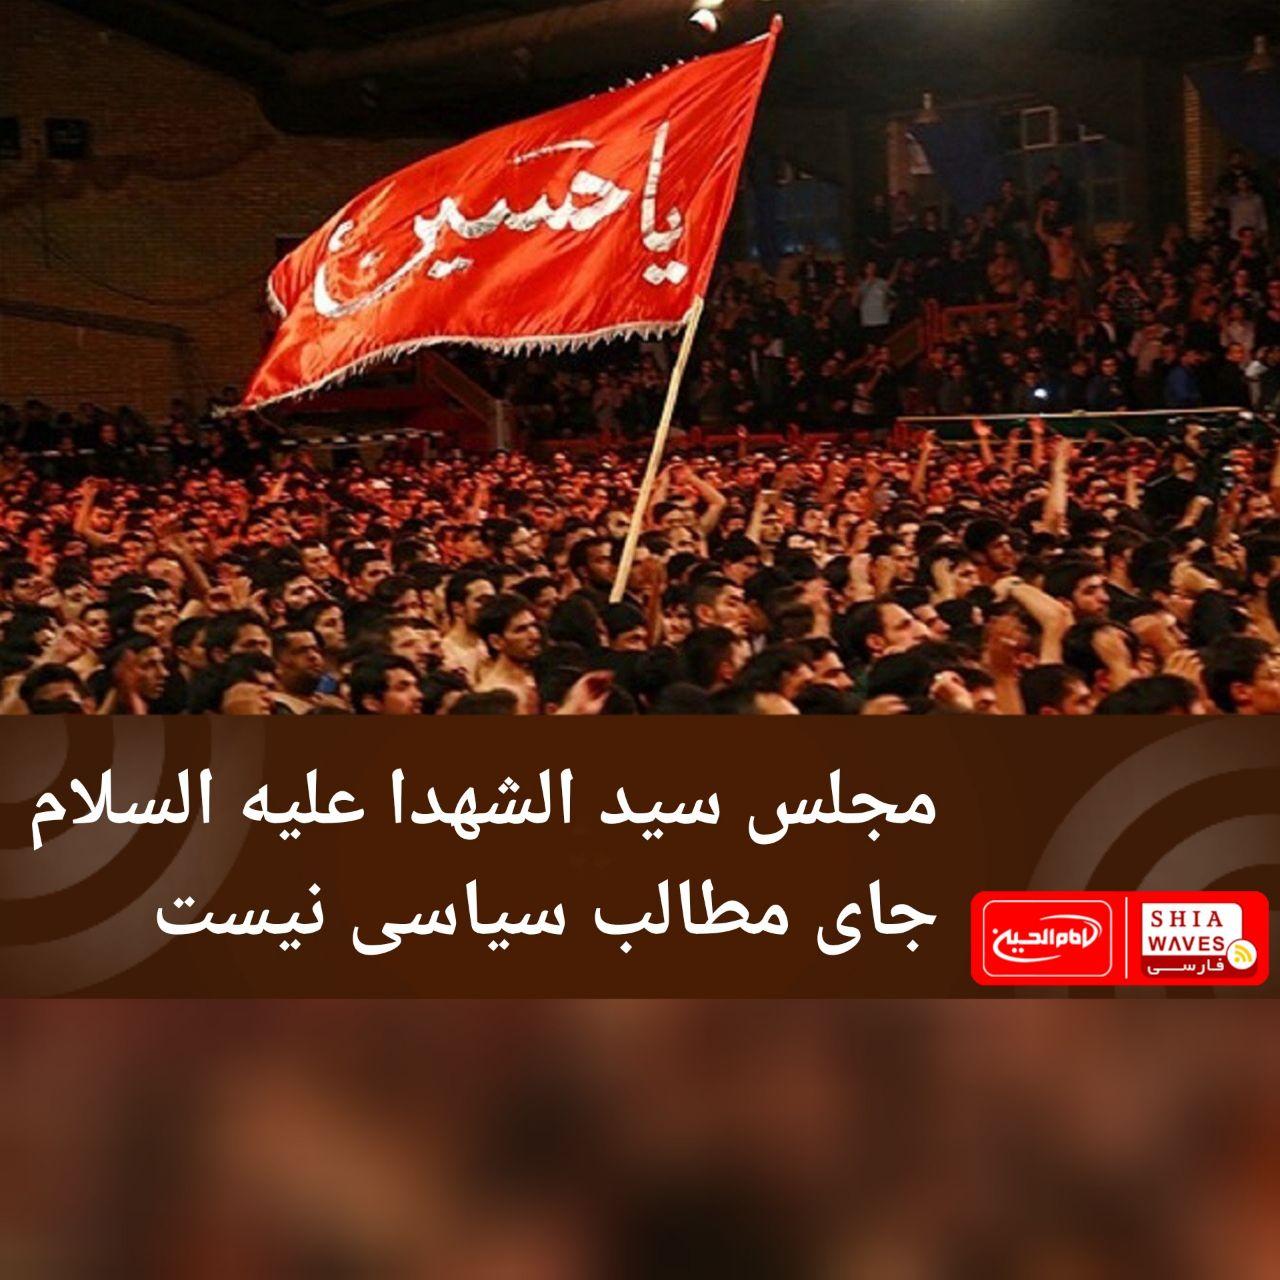 تصویر مجلس سید الشهدا علیه السلام جای مطالب سیاسی نیست